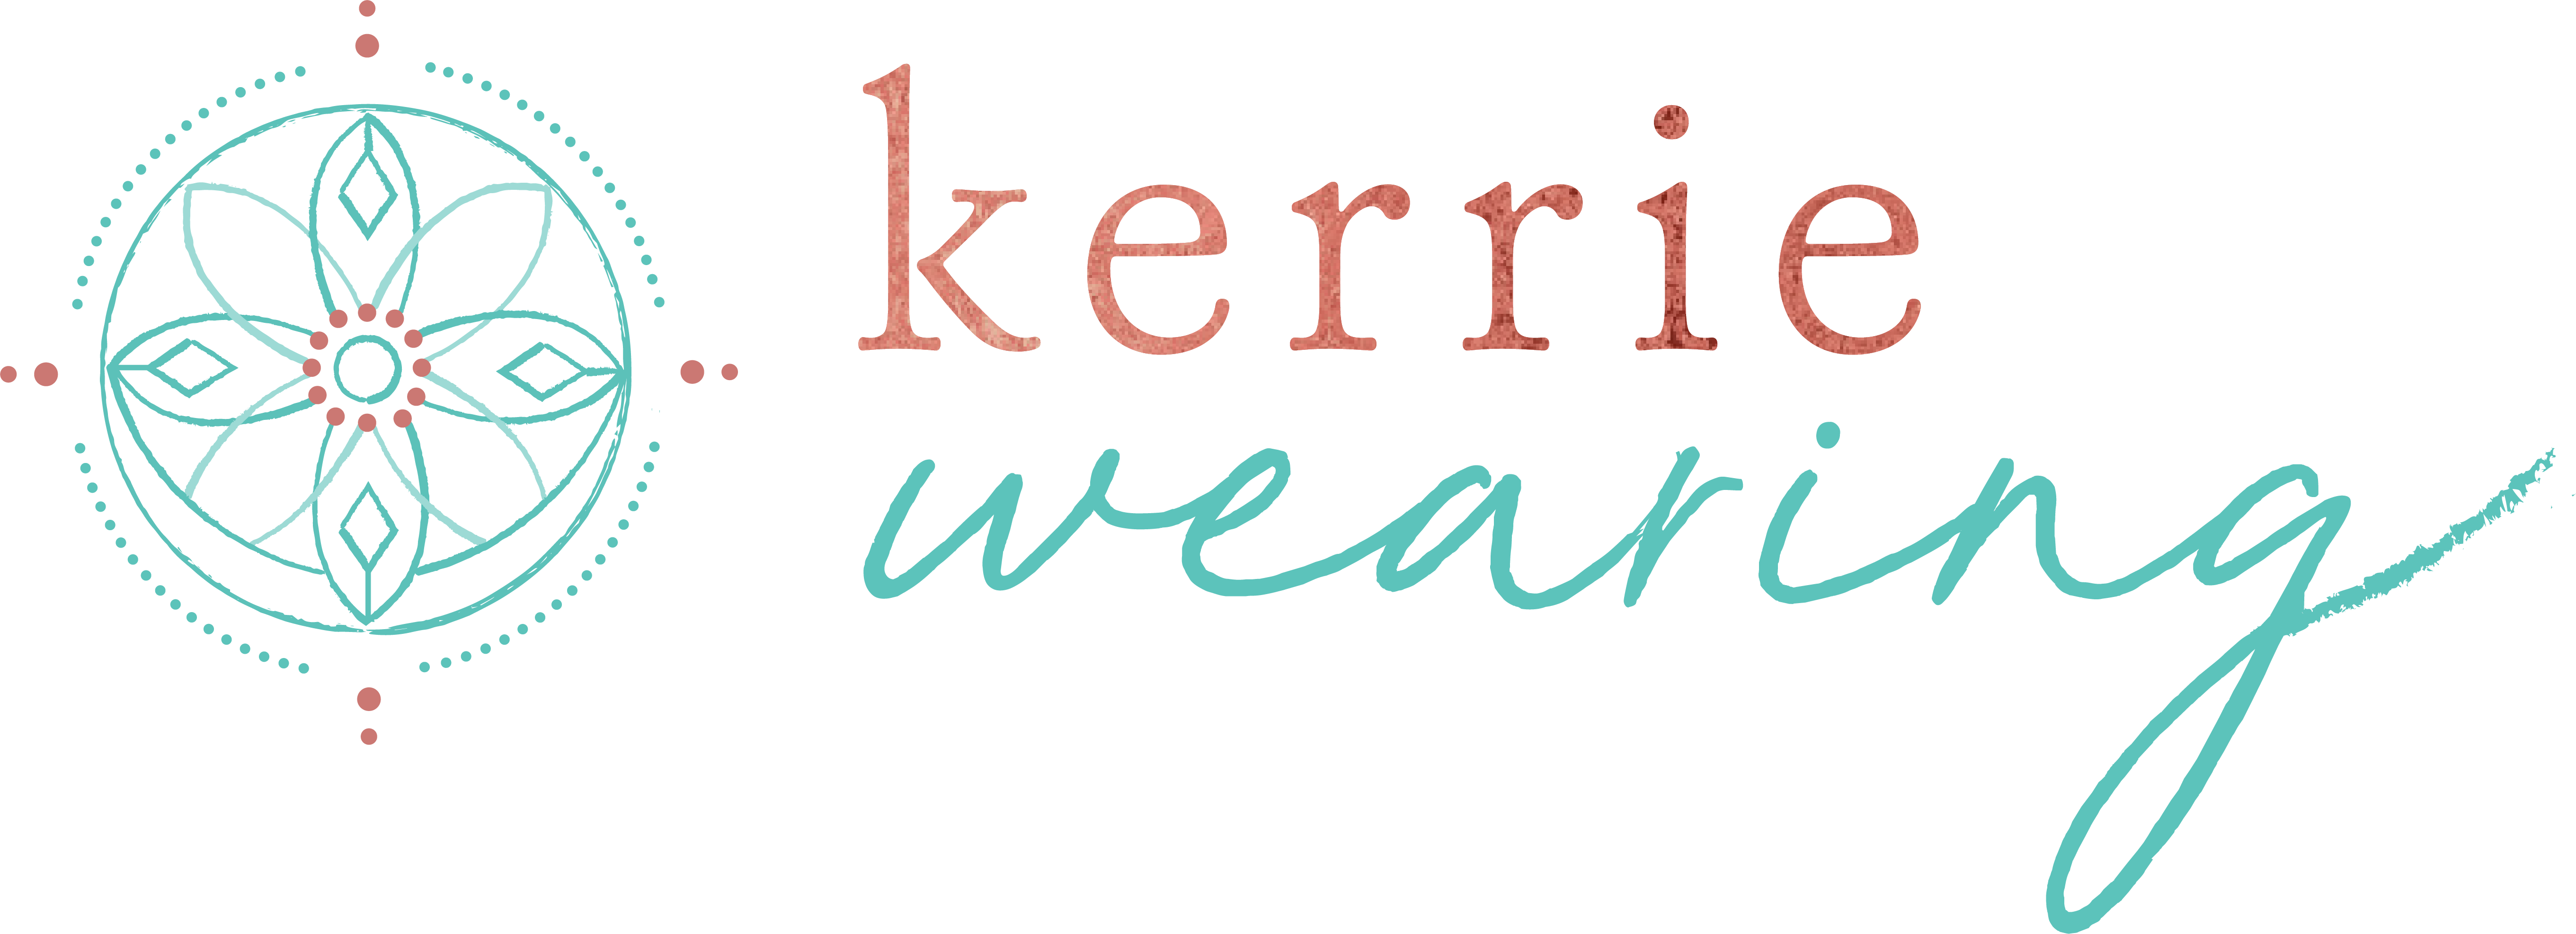 Kerrie Wearing